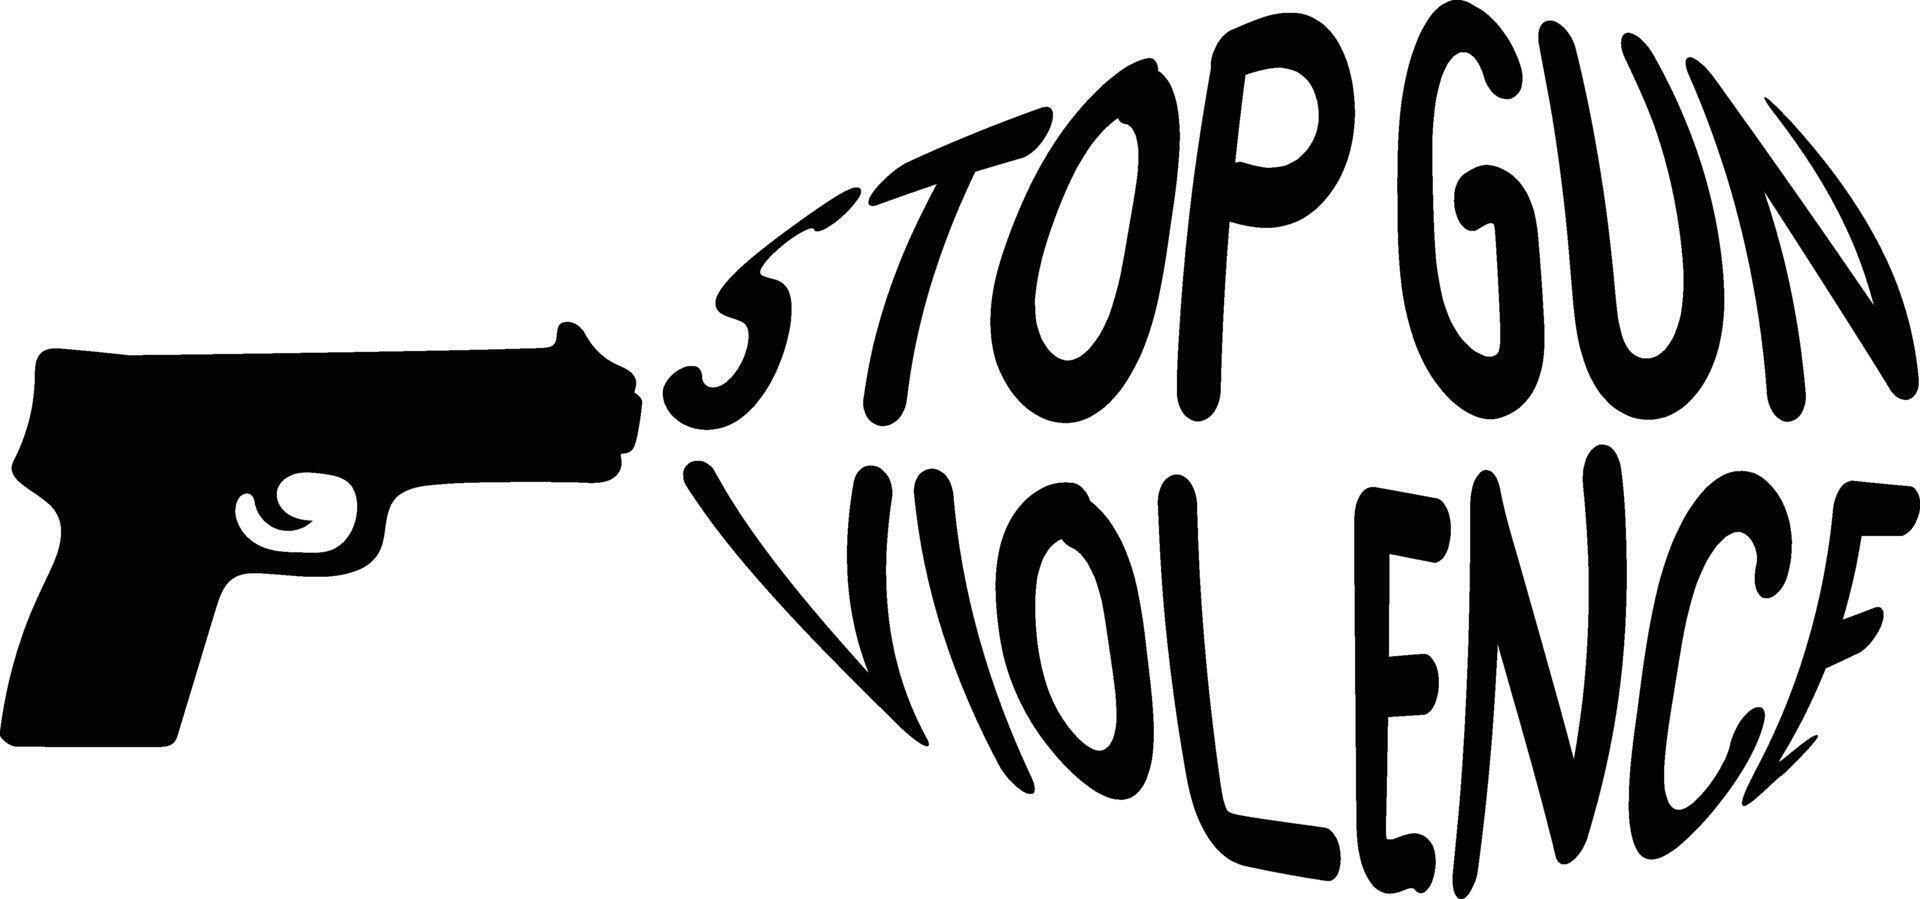 Stop Gun Violence Hand Drawn Illustration vector